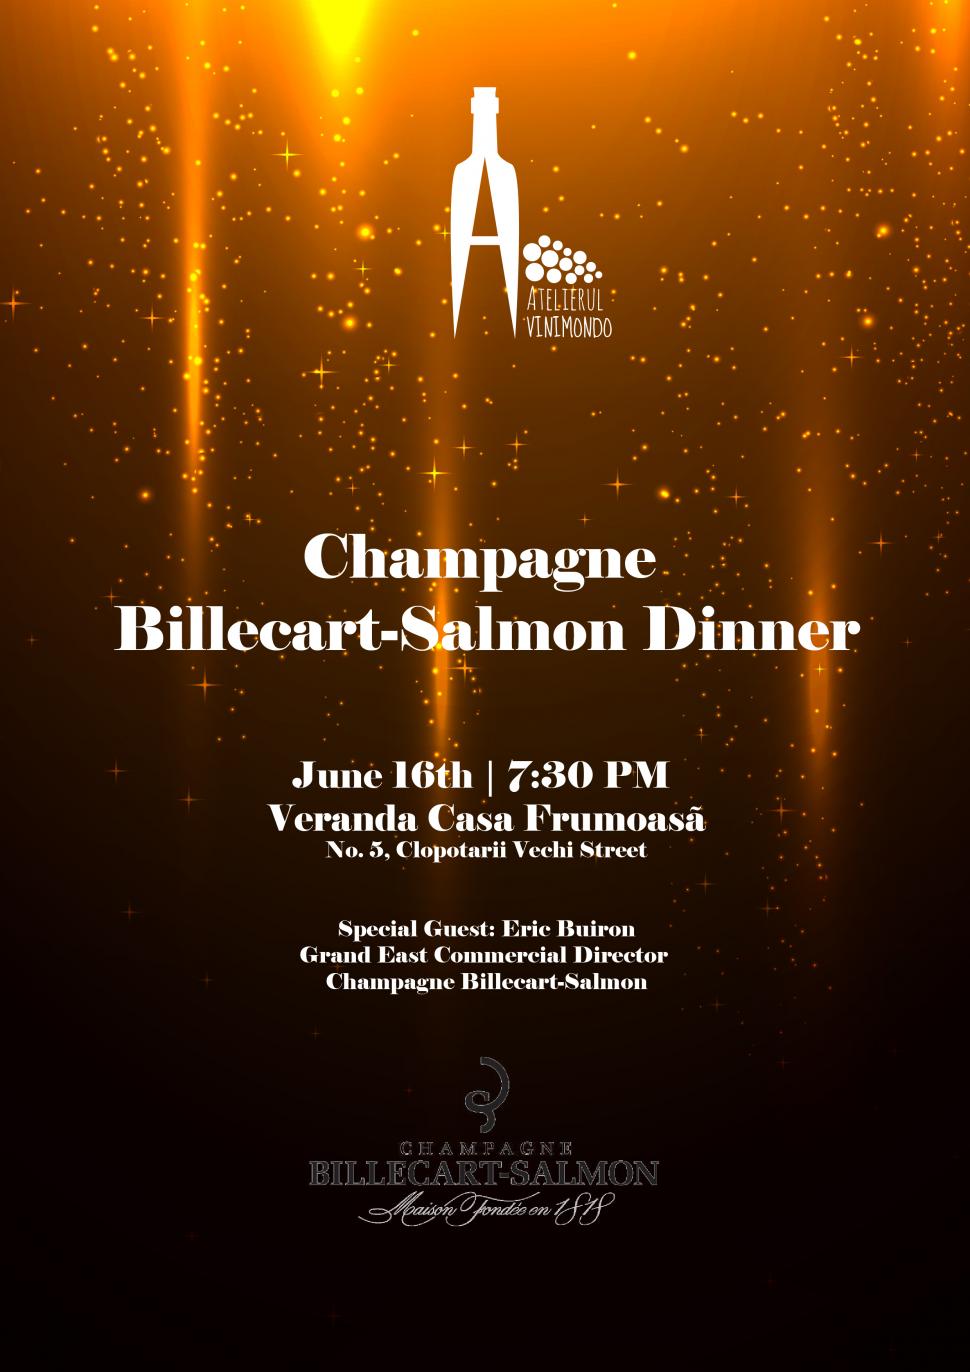 Champagne Billecart-Salmon Dinner